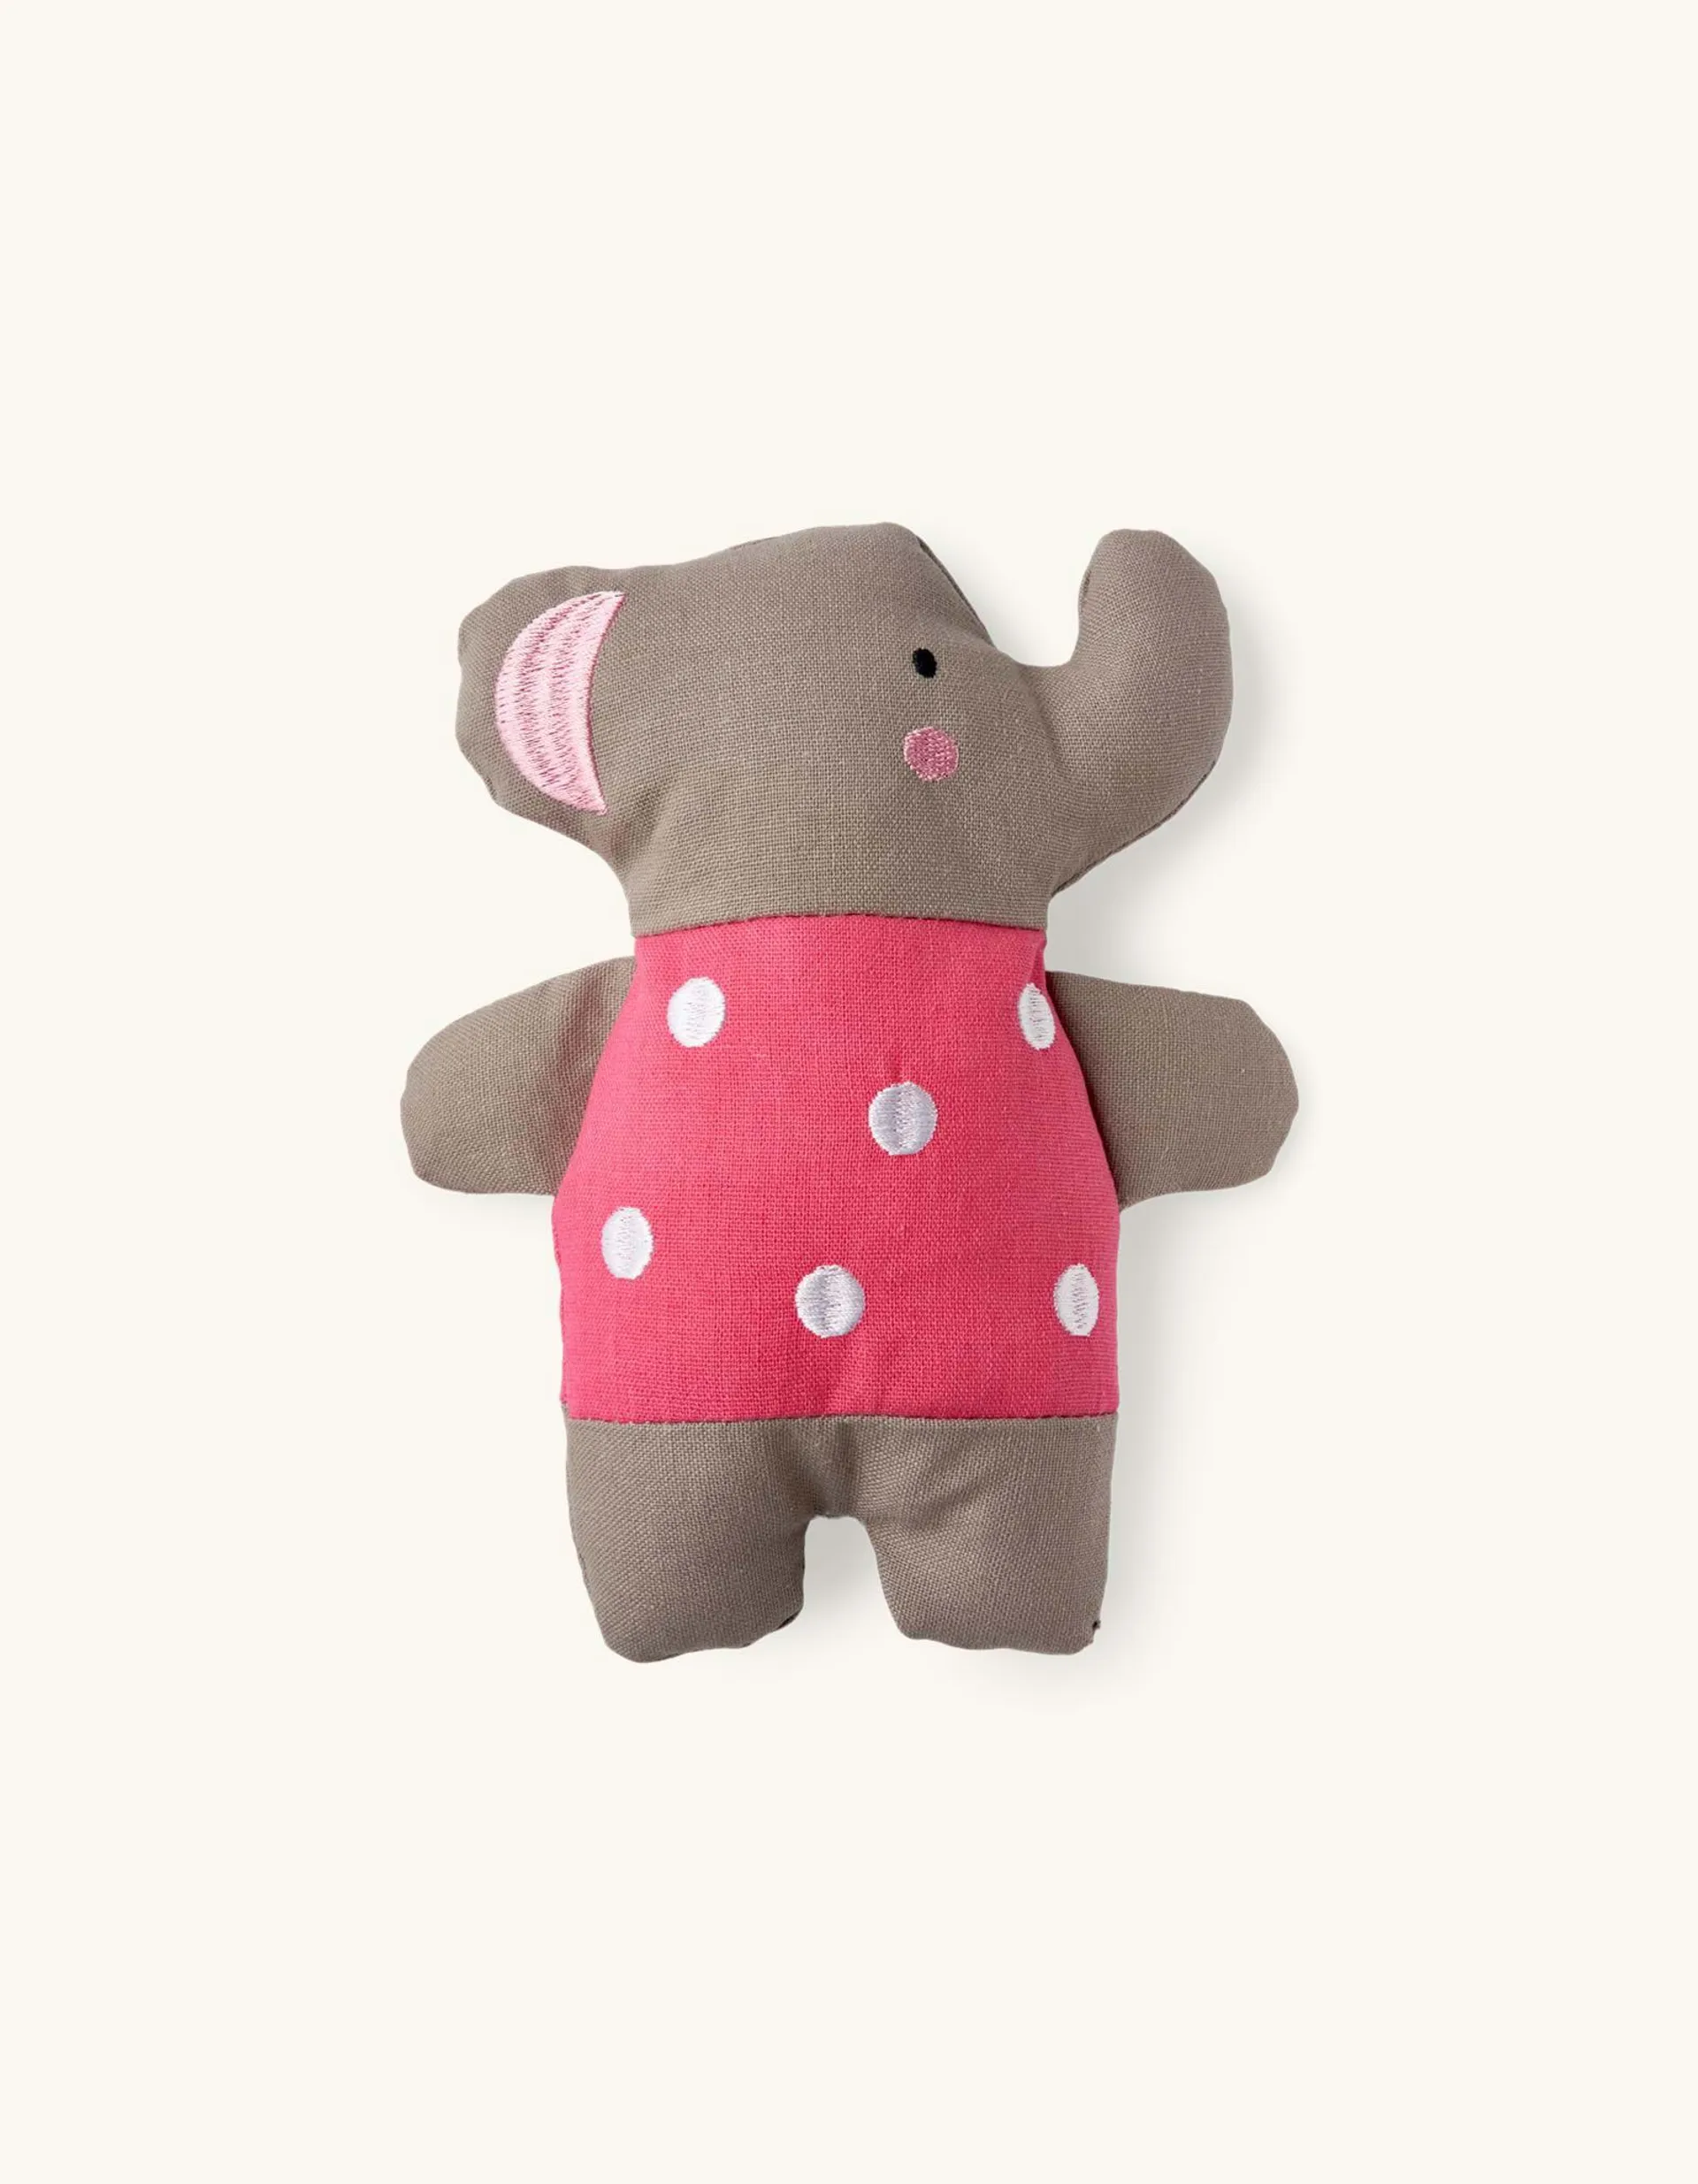 Soft toy elephant Linen/polyester/viscose/cotton. 17 cm.